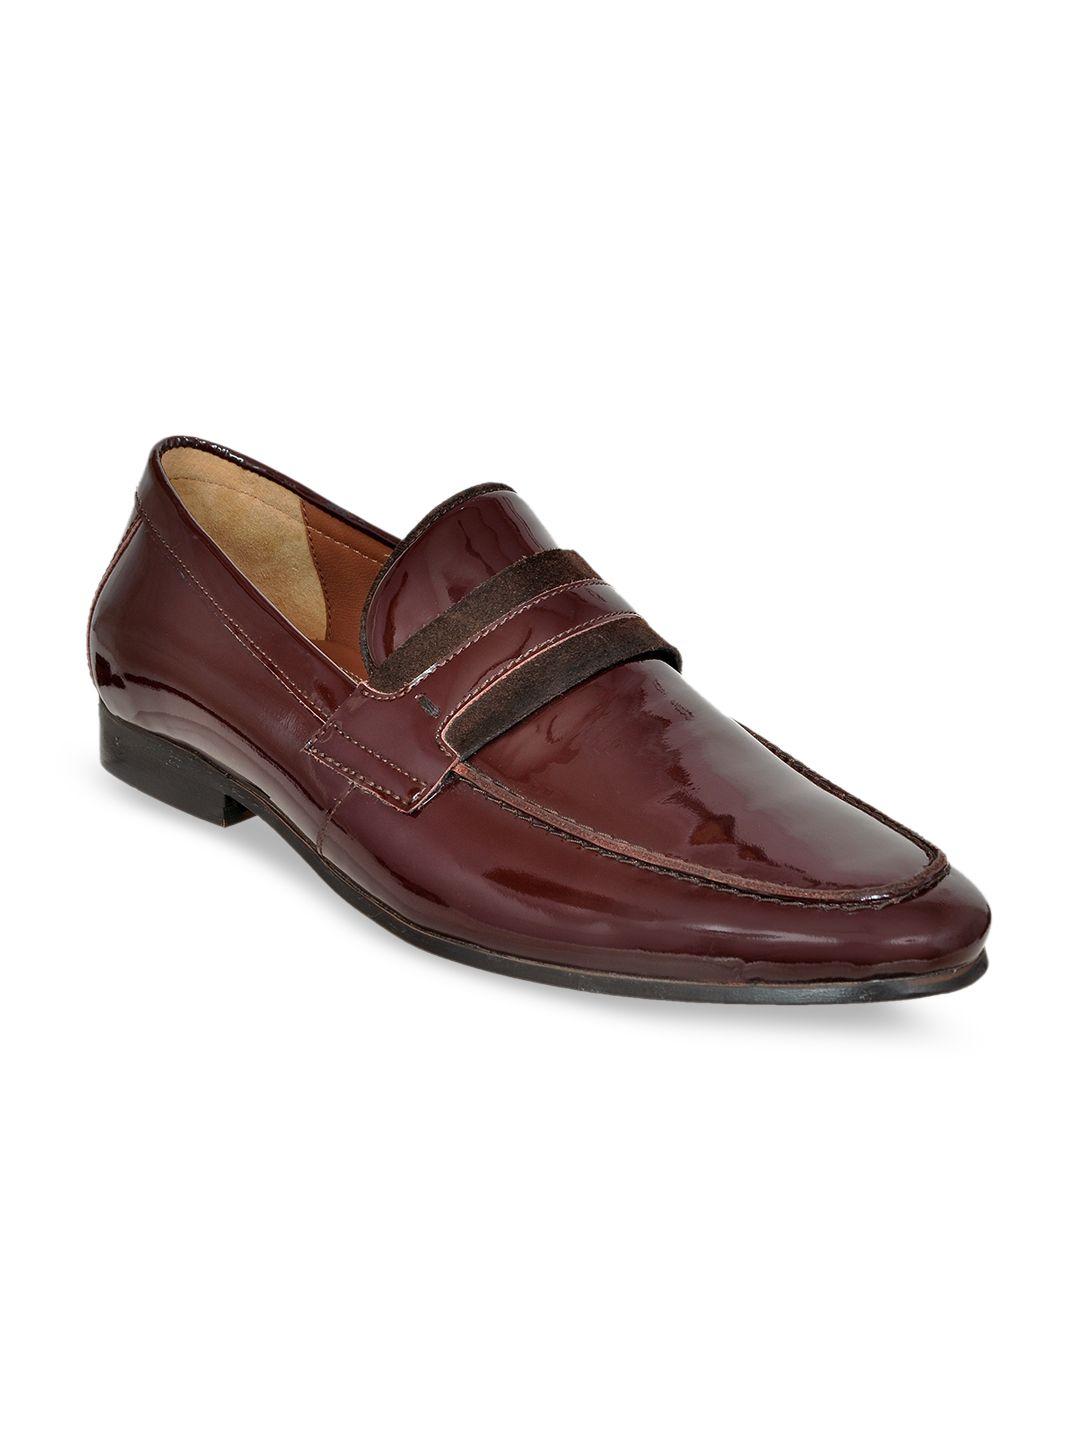 hx london men patent leather formal slip on mocassins